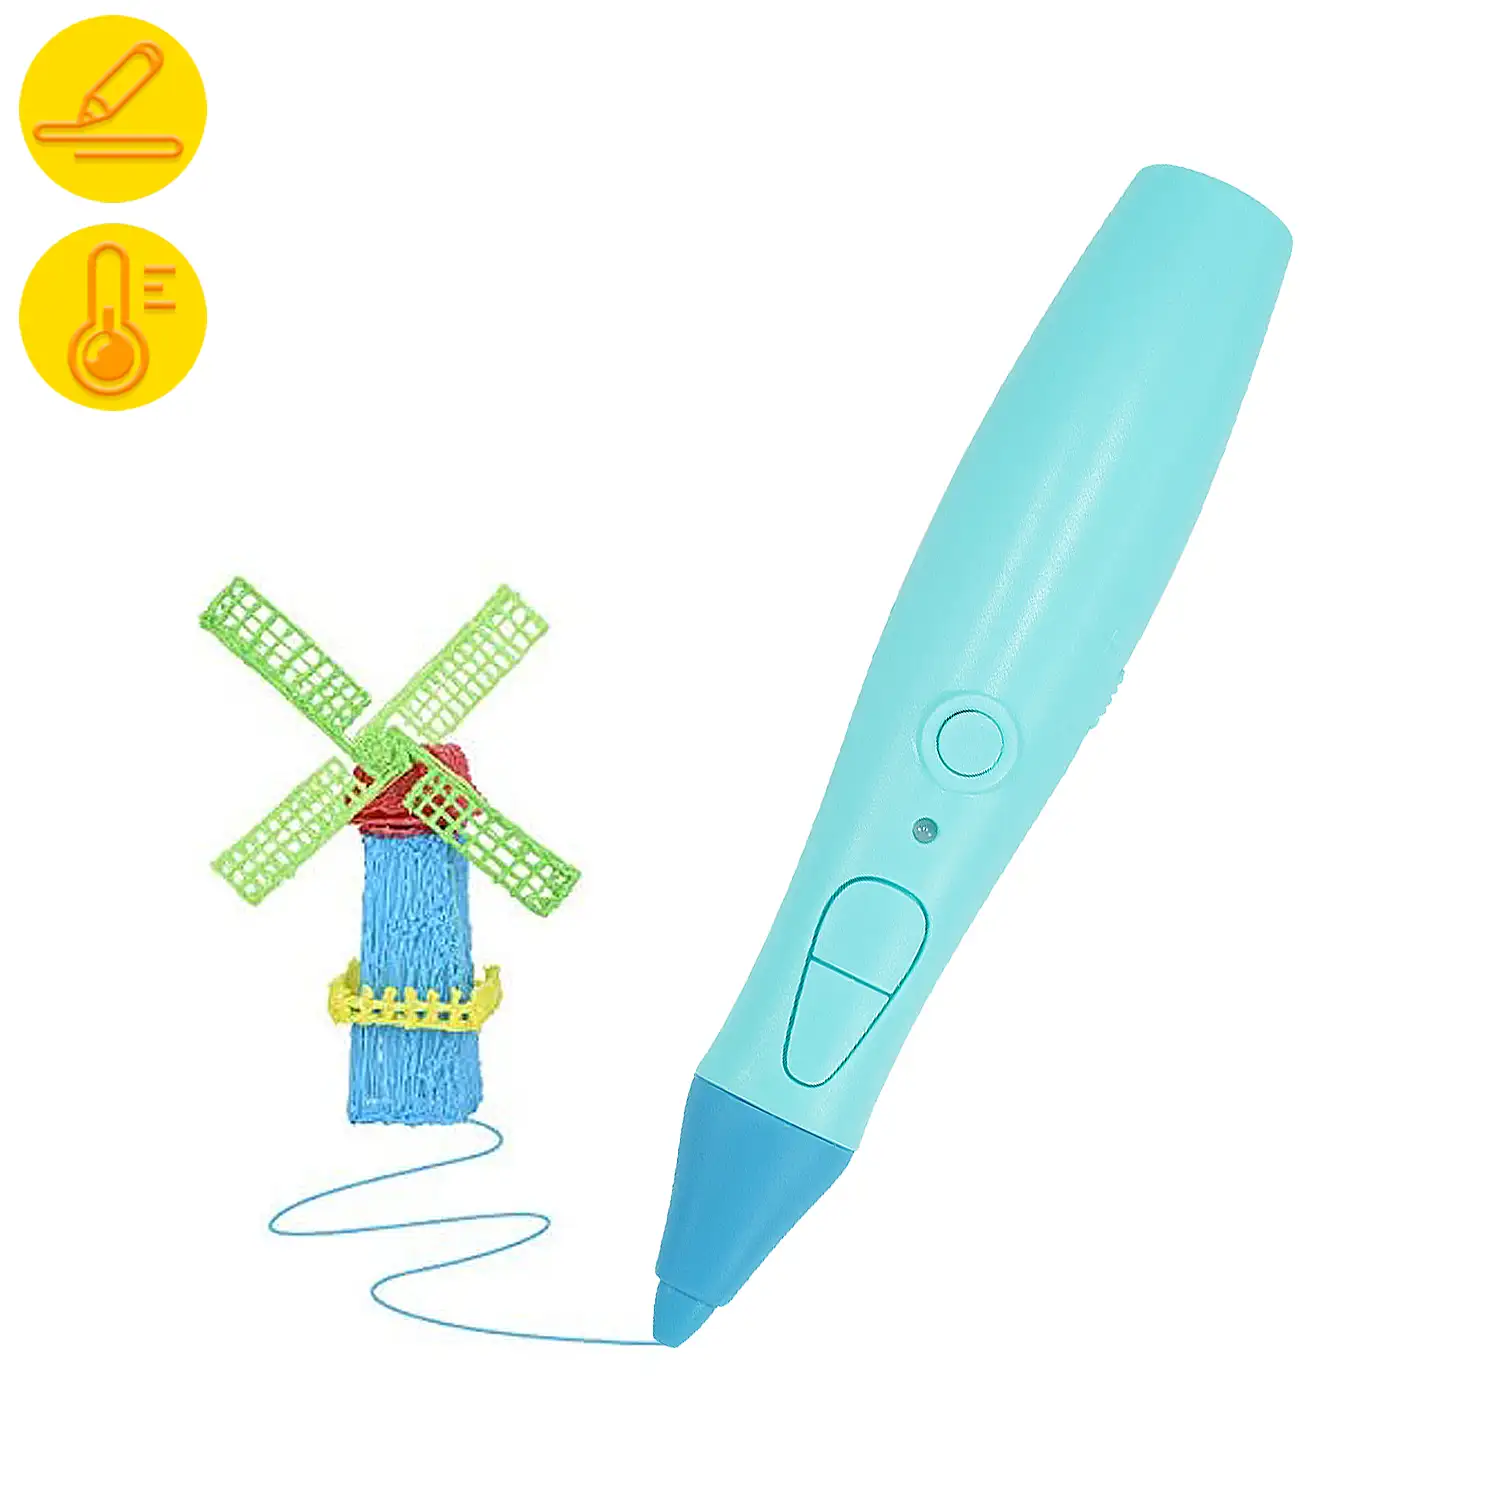 Printer Pen 3D de baja temperatura. Incluye 5 rollos de filamento PCL de 2 metros. Batería recargable.